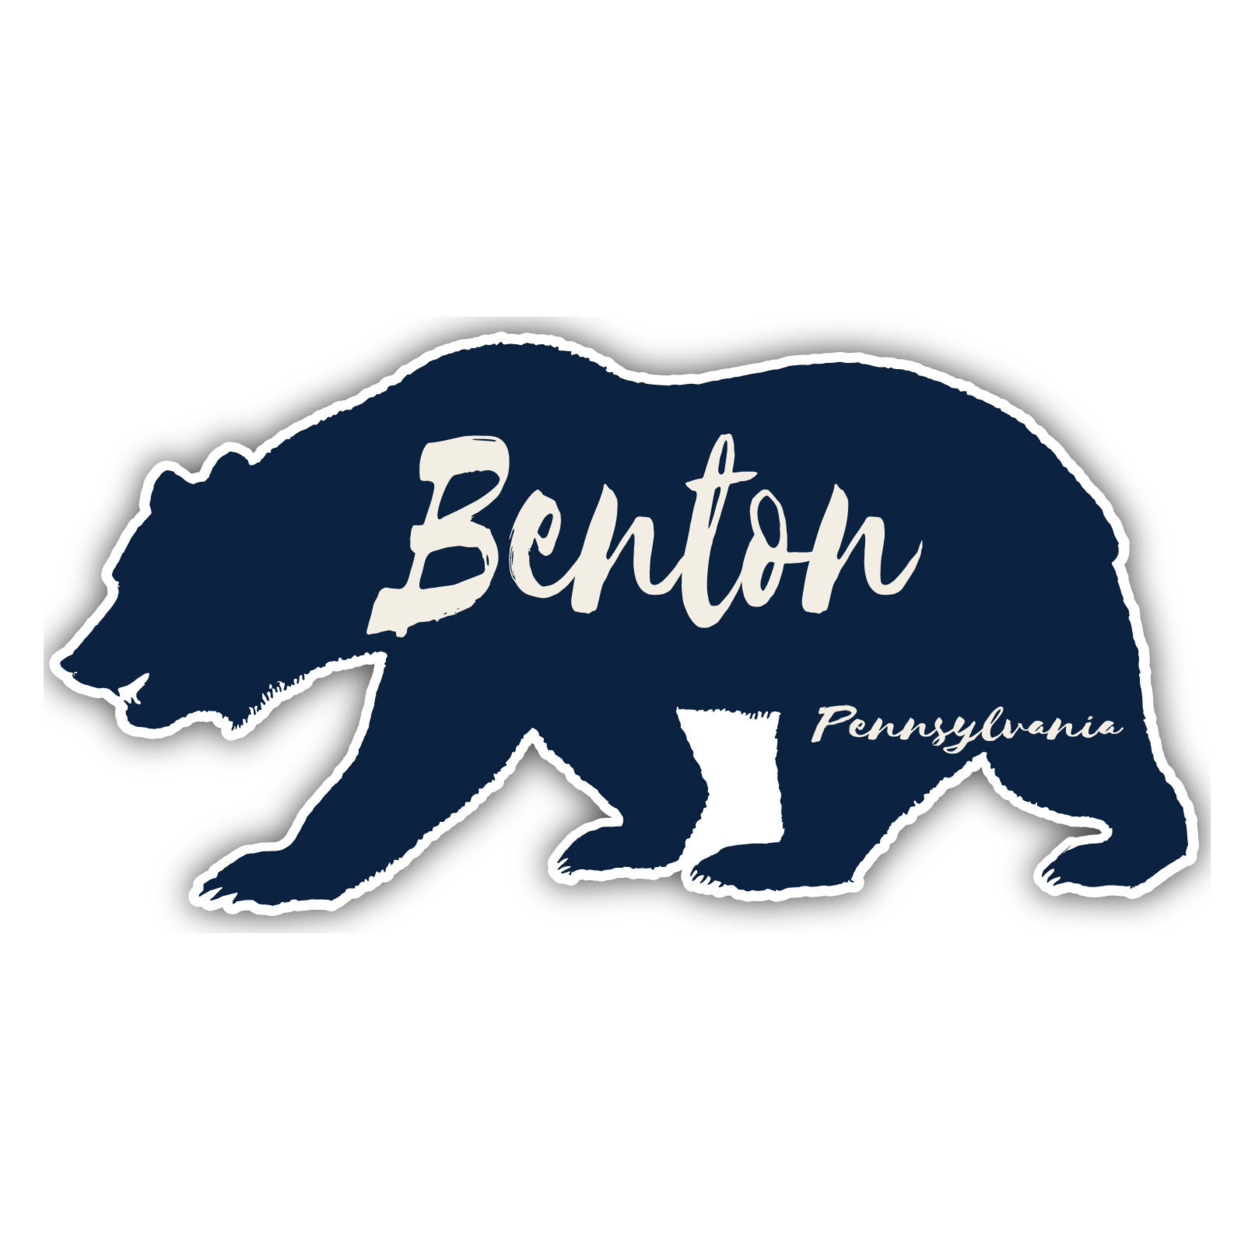 Benton Pennsylvania Souvenir Decorative Stickers (Choose Theme And Size) - Single Unit, 2-Inch, Bear